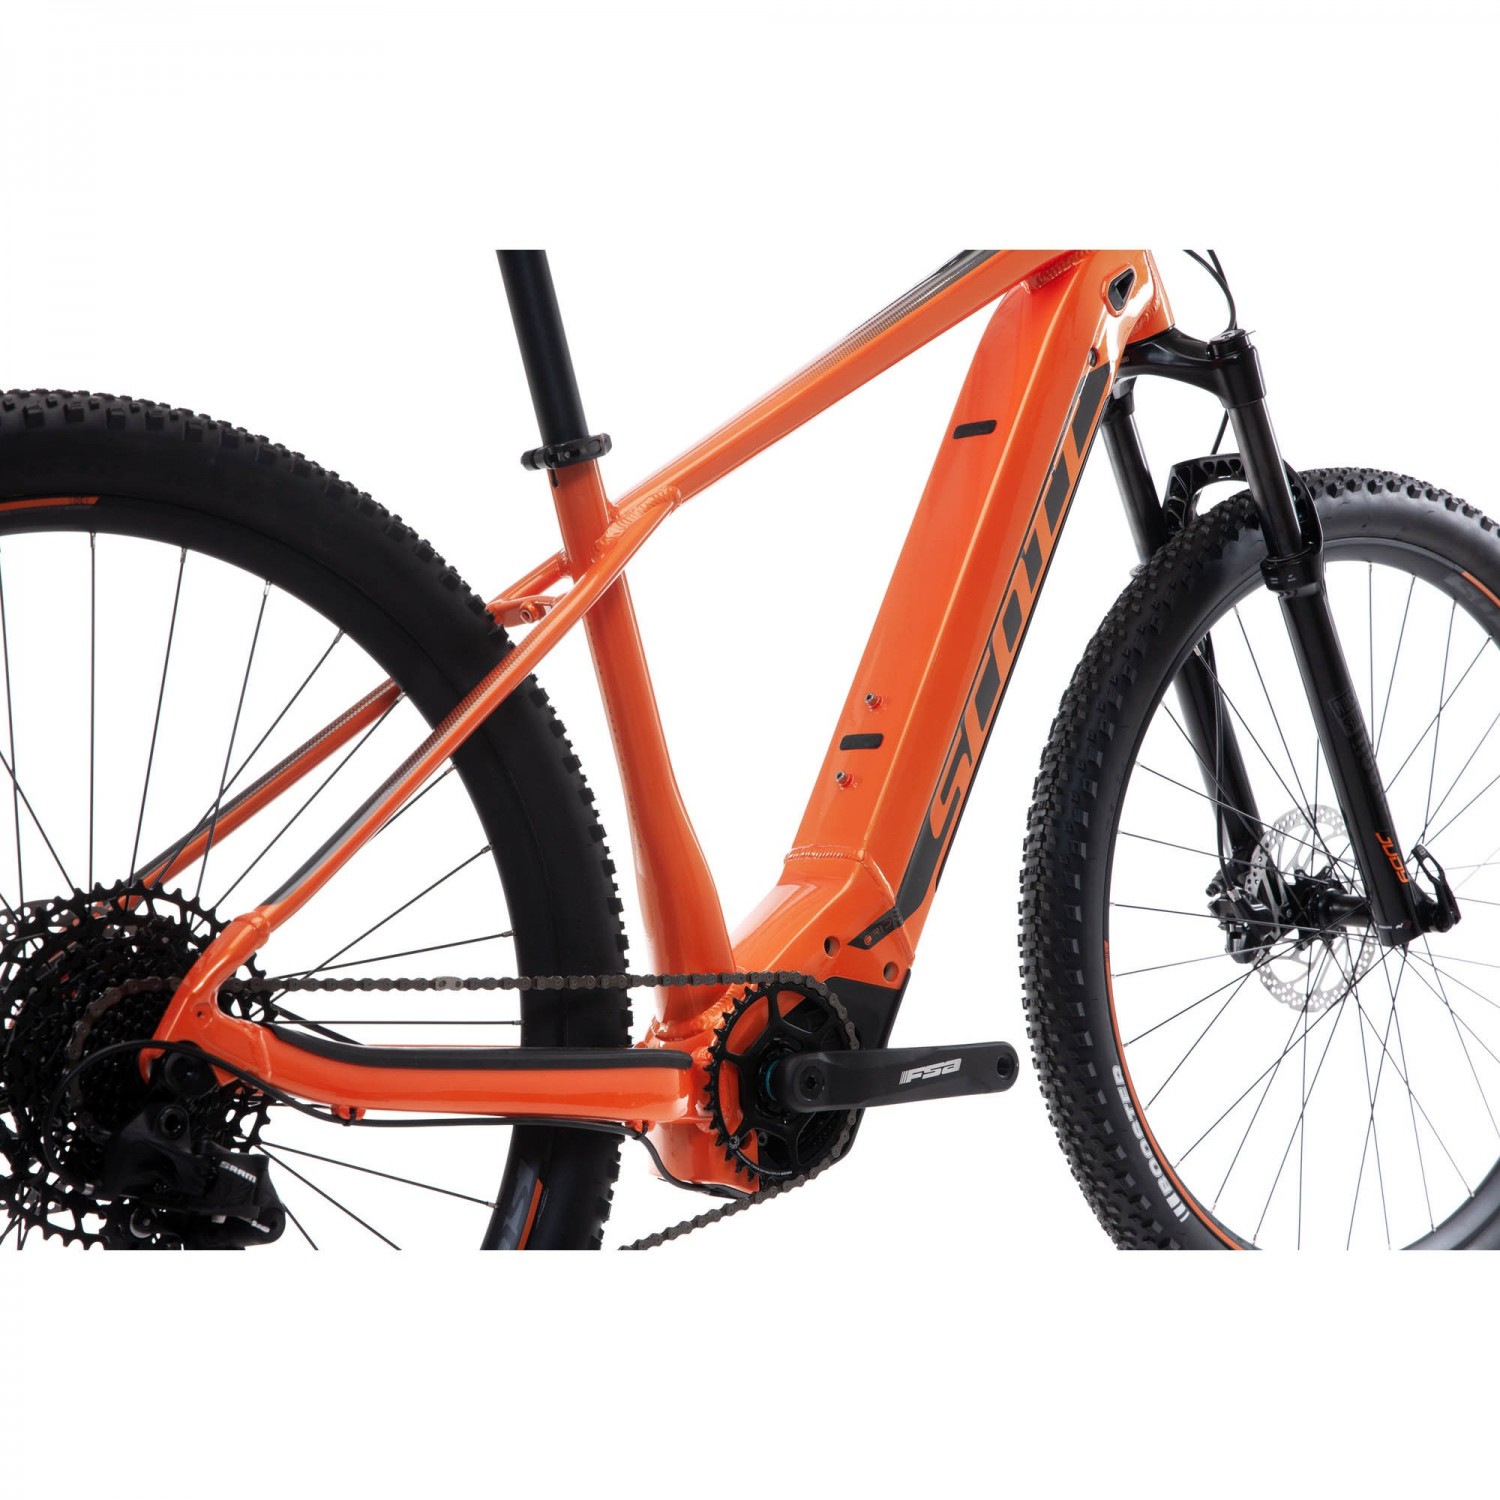 Luiheid Fabel Lodge Велосипед SCOTT Aspect eRide 910 (2020), в официальном магазине SCOTT,  артикул 274838 по цене 300 220 руб. - ridecycle.ru